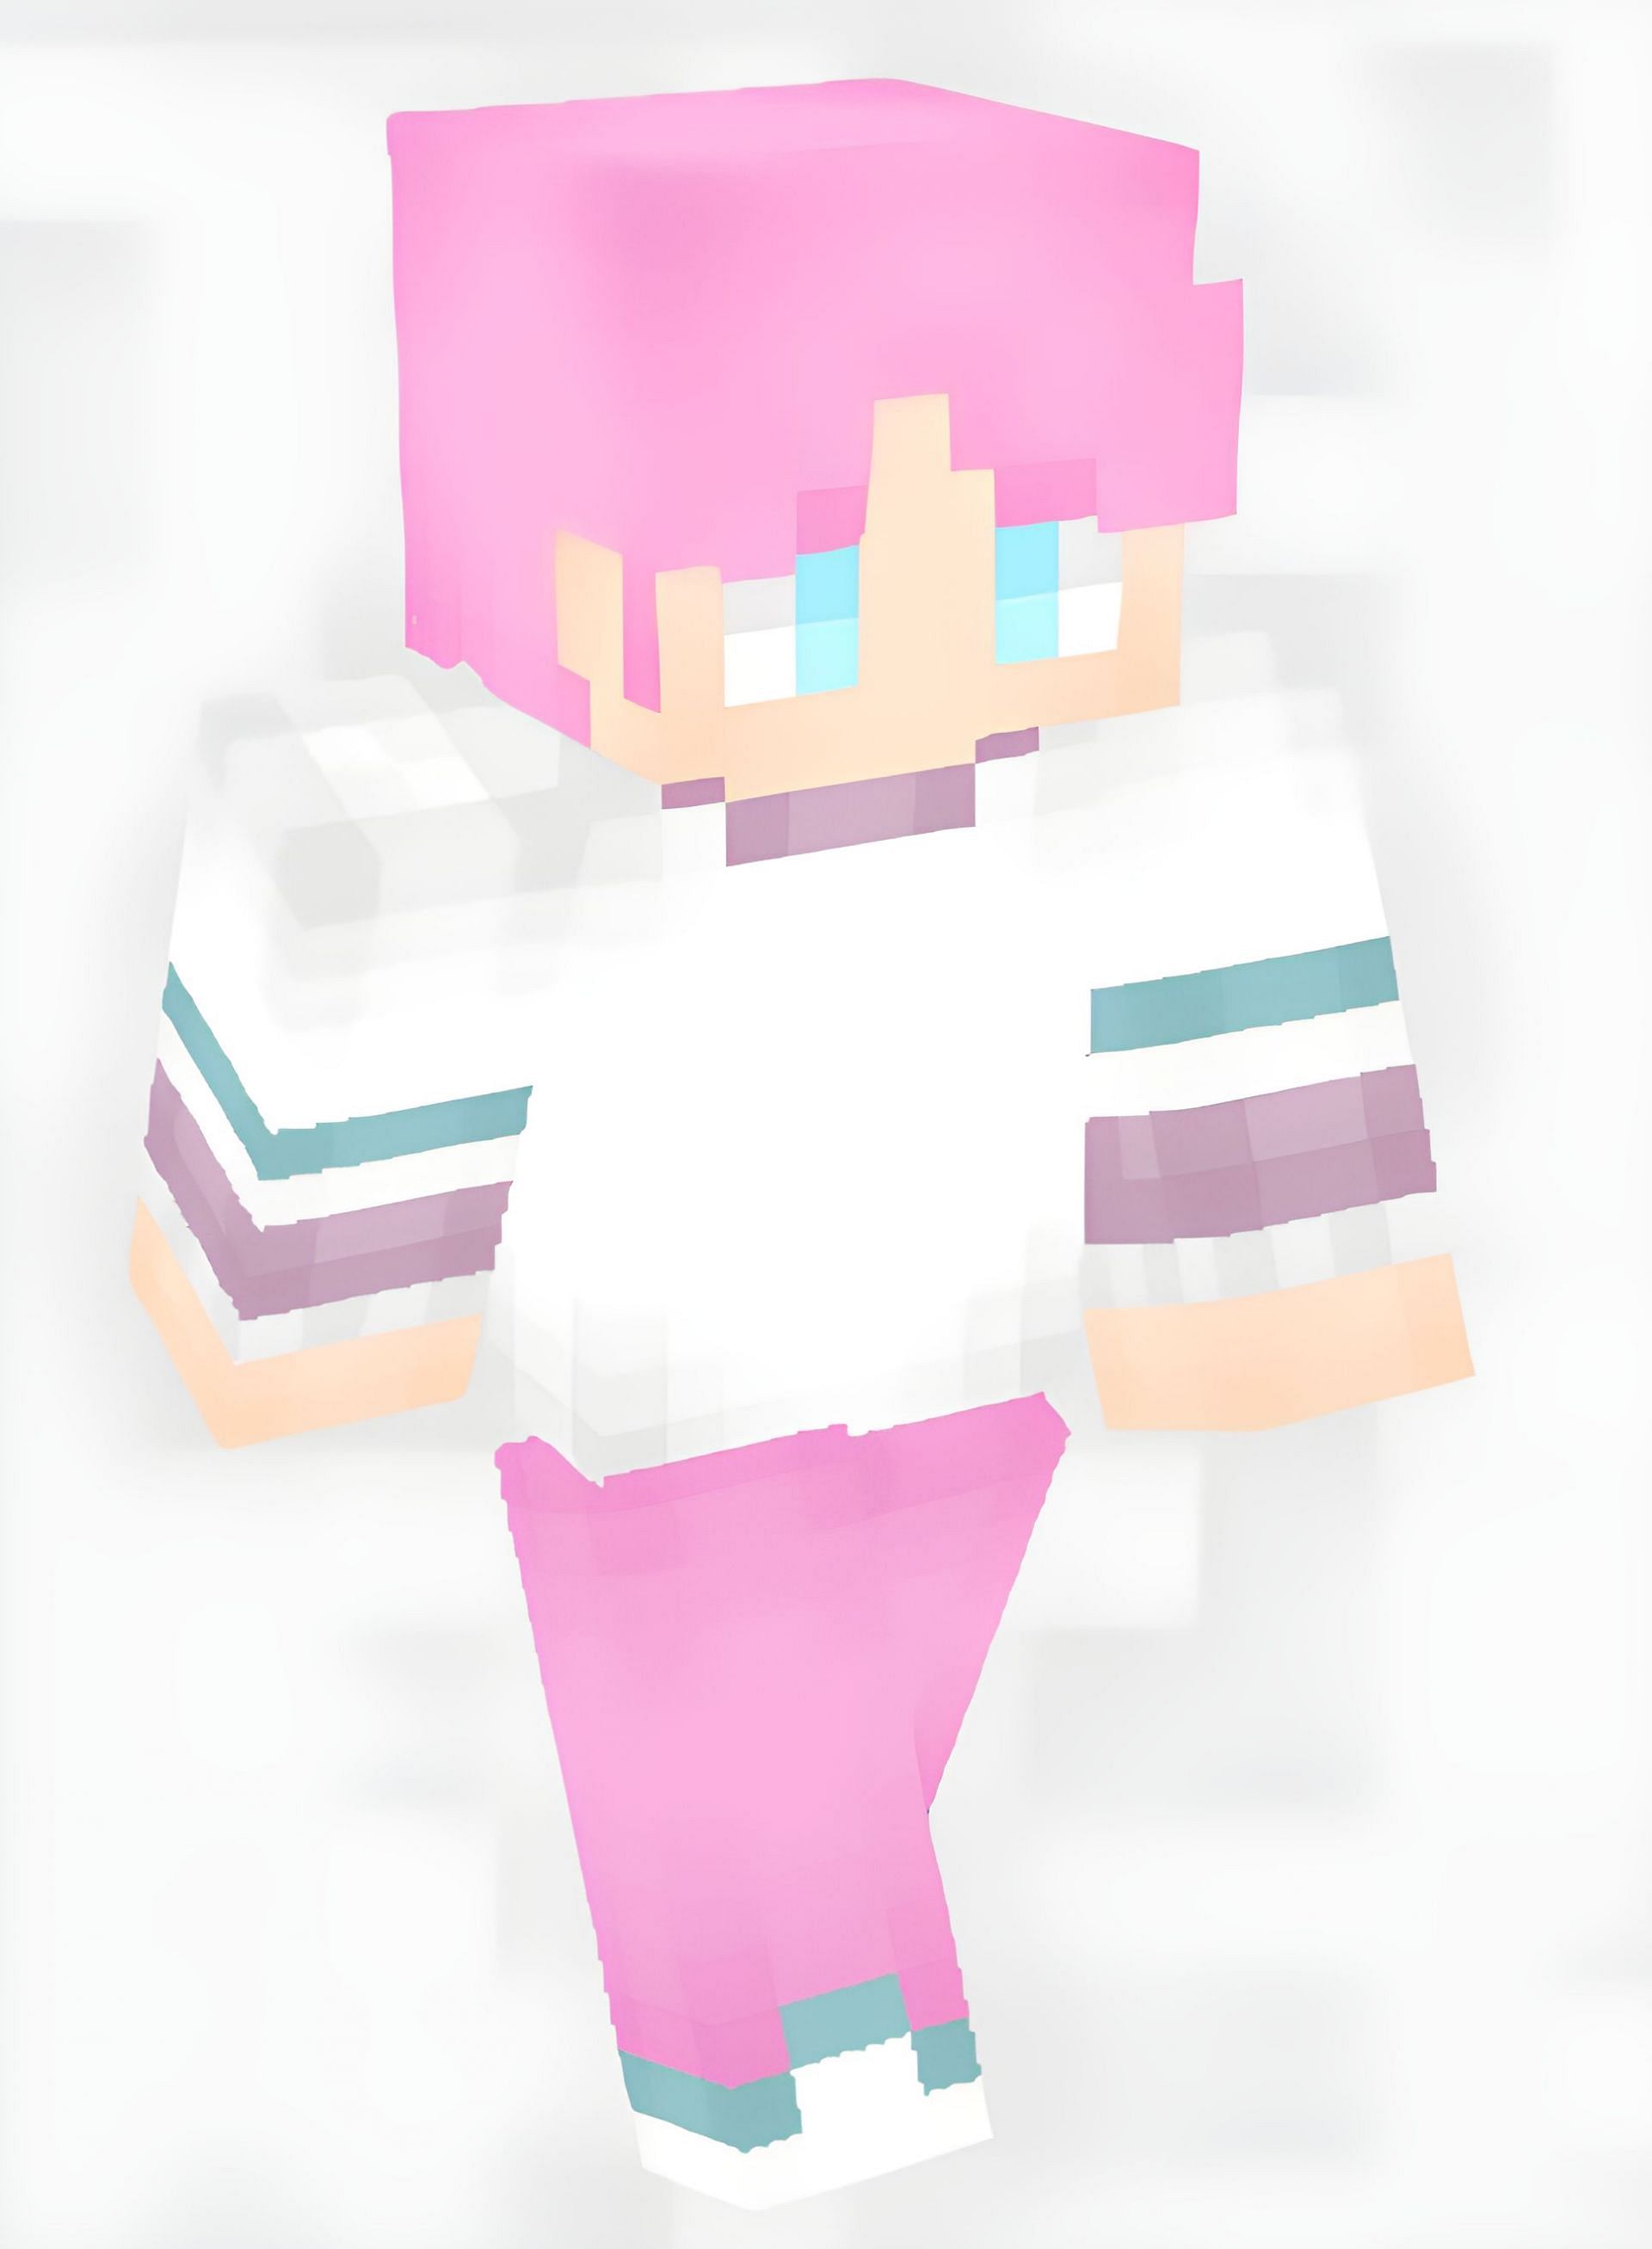 The Pink boy skin (Image via SkinsMC)